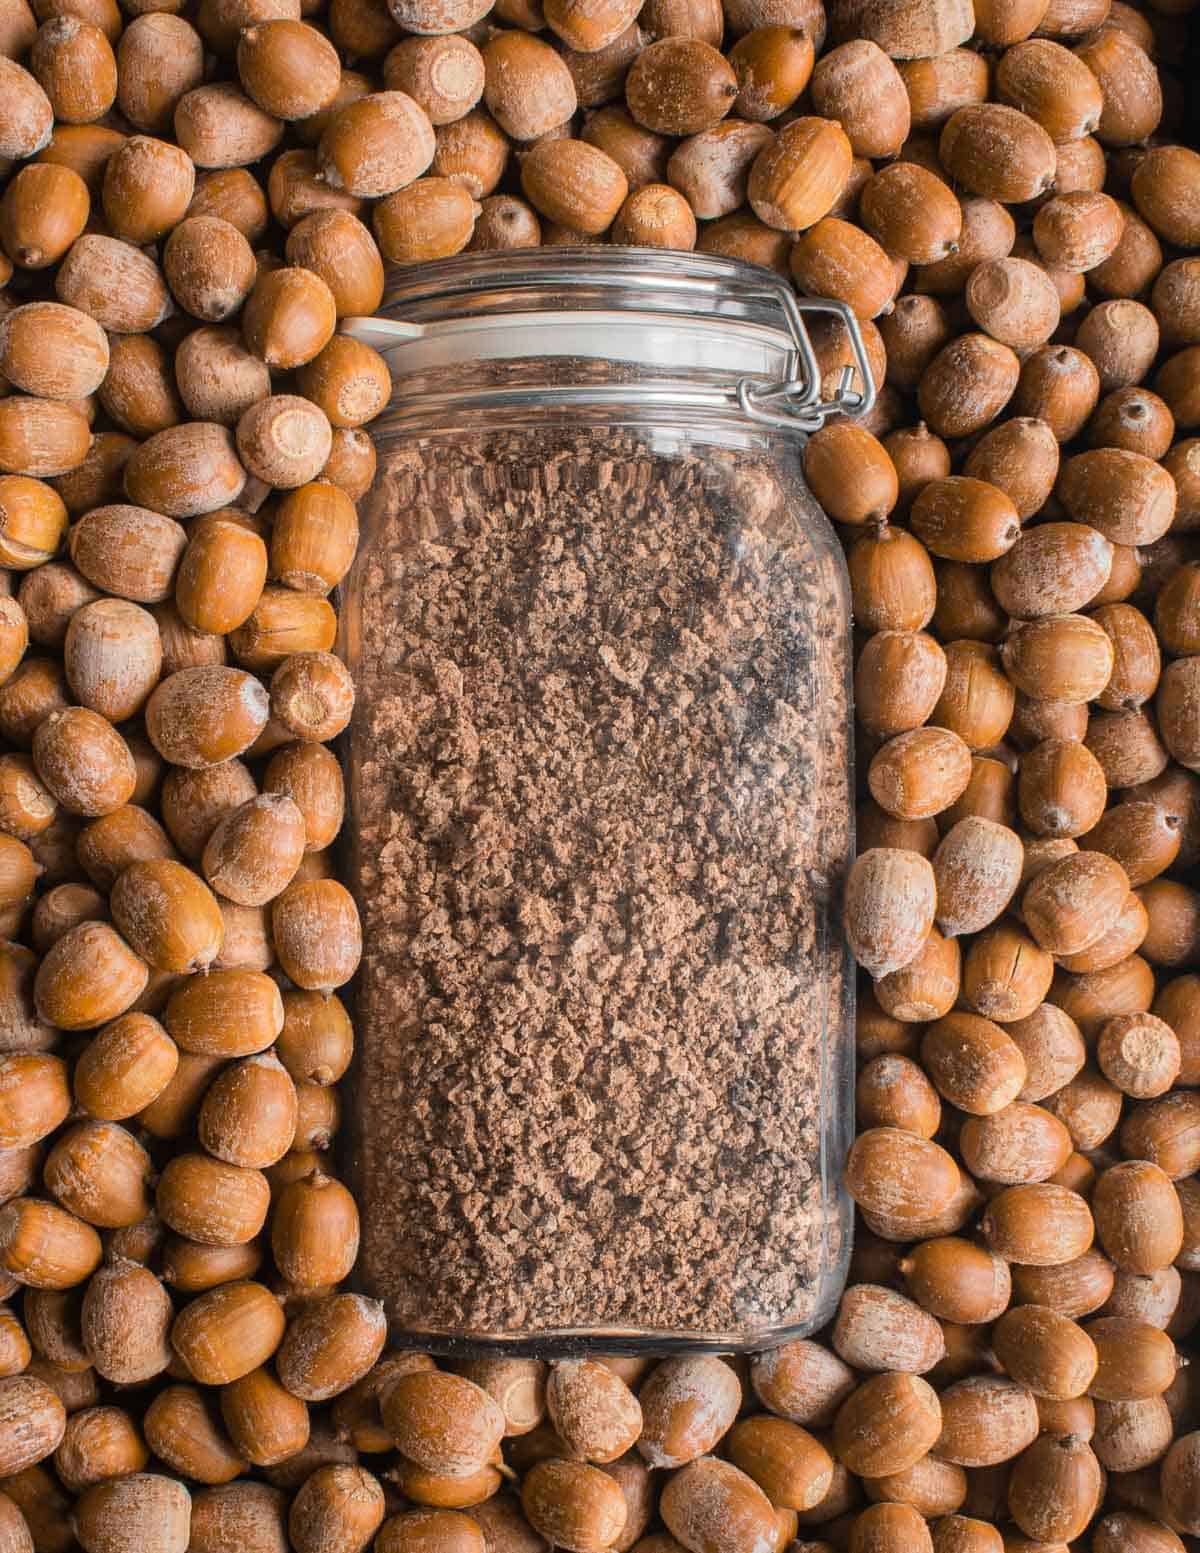 A jar of acorn flour next to many dried red oak acorns. 